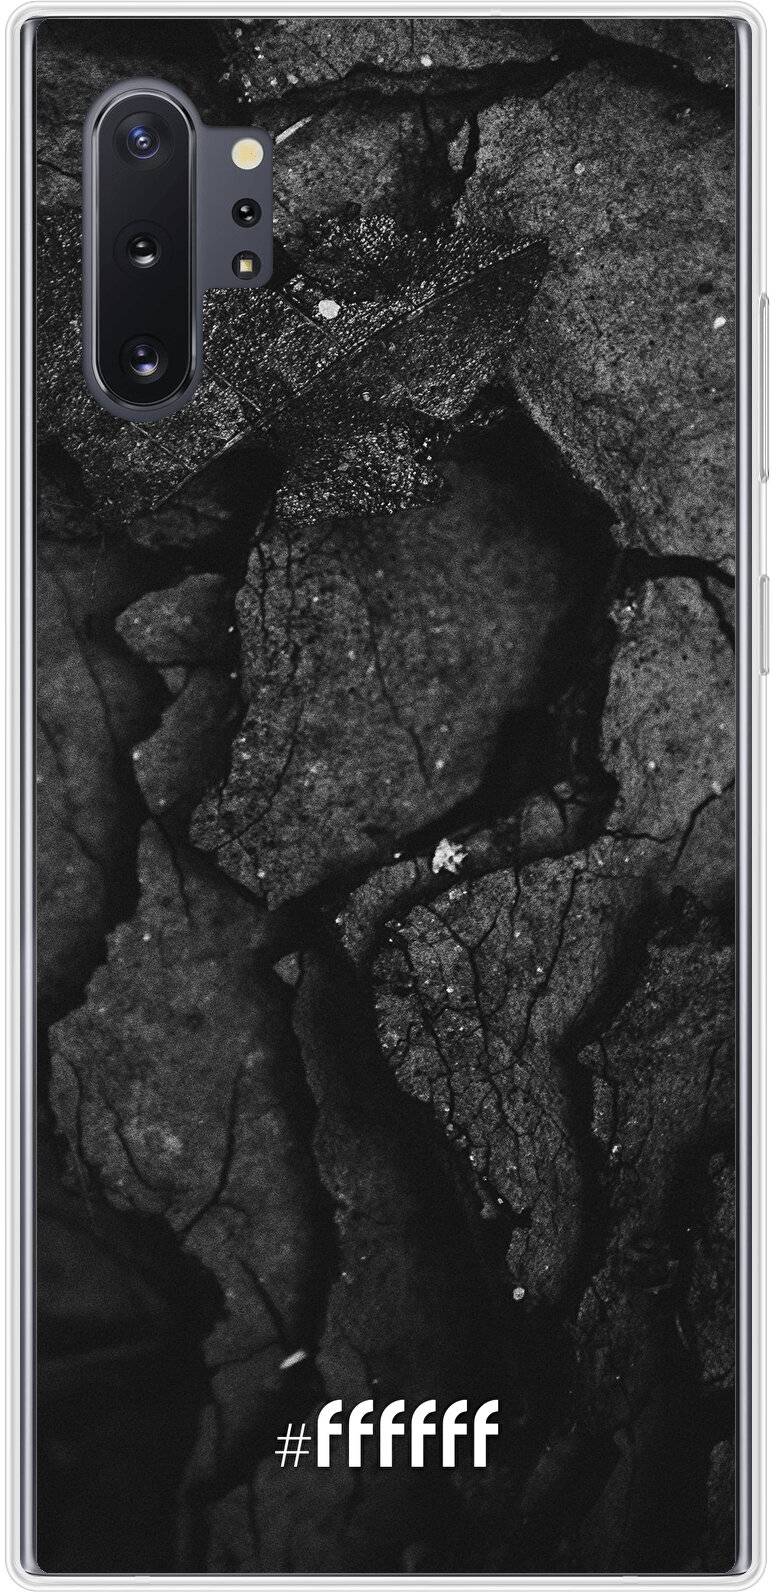 Dark Rock Formation Galaxy Note 10 Plus